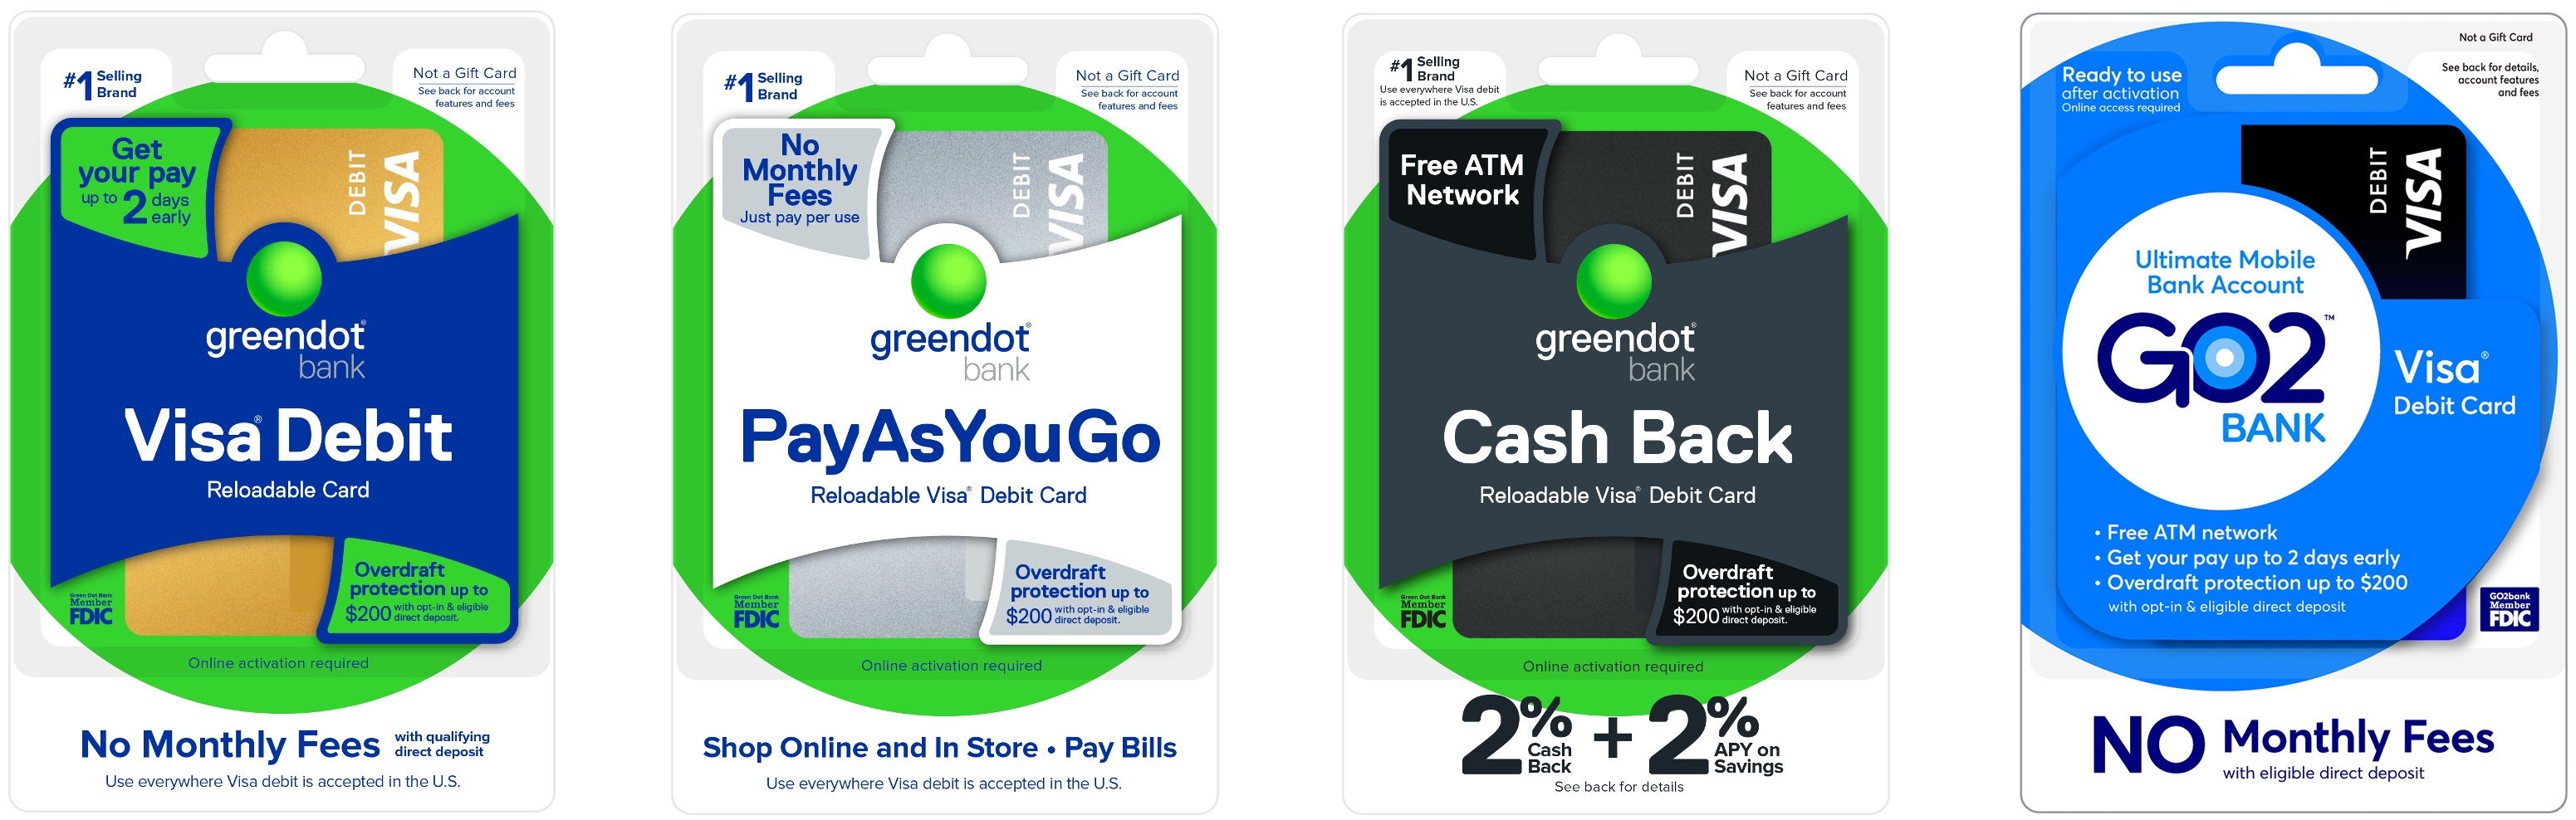 Green Dot - Cash Back Mobile Account & Debit Cards